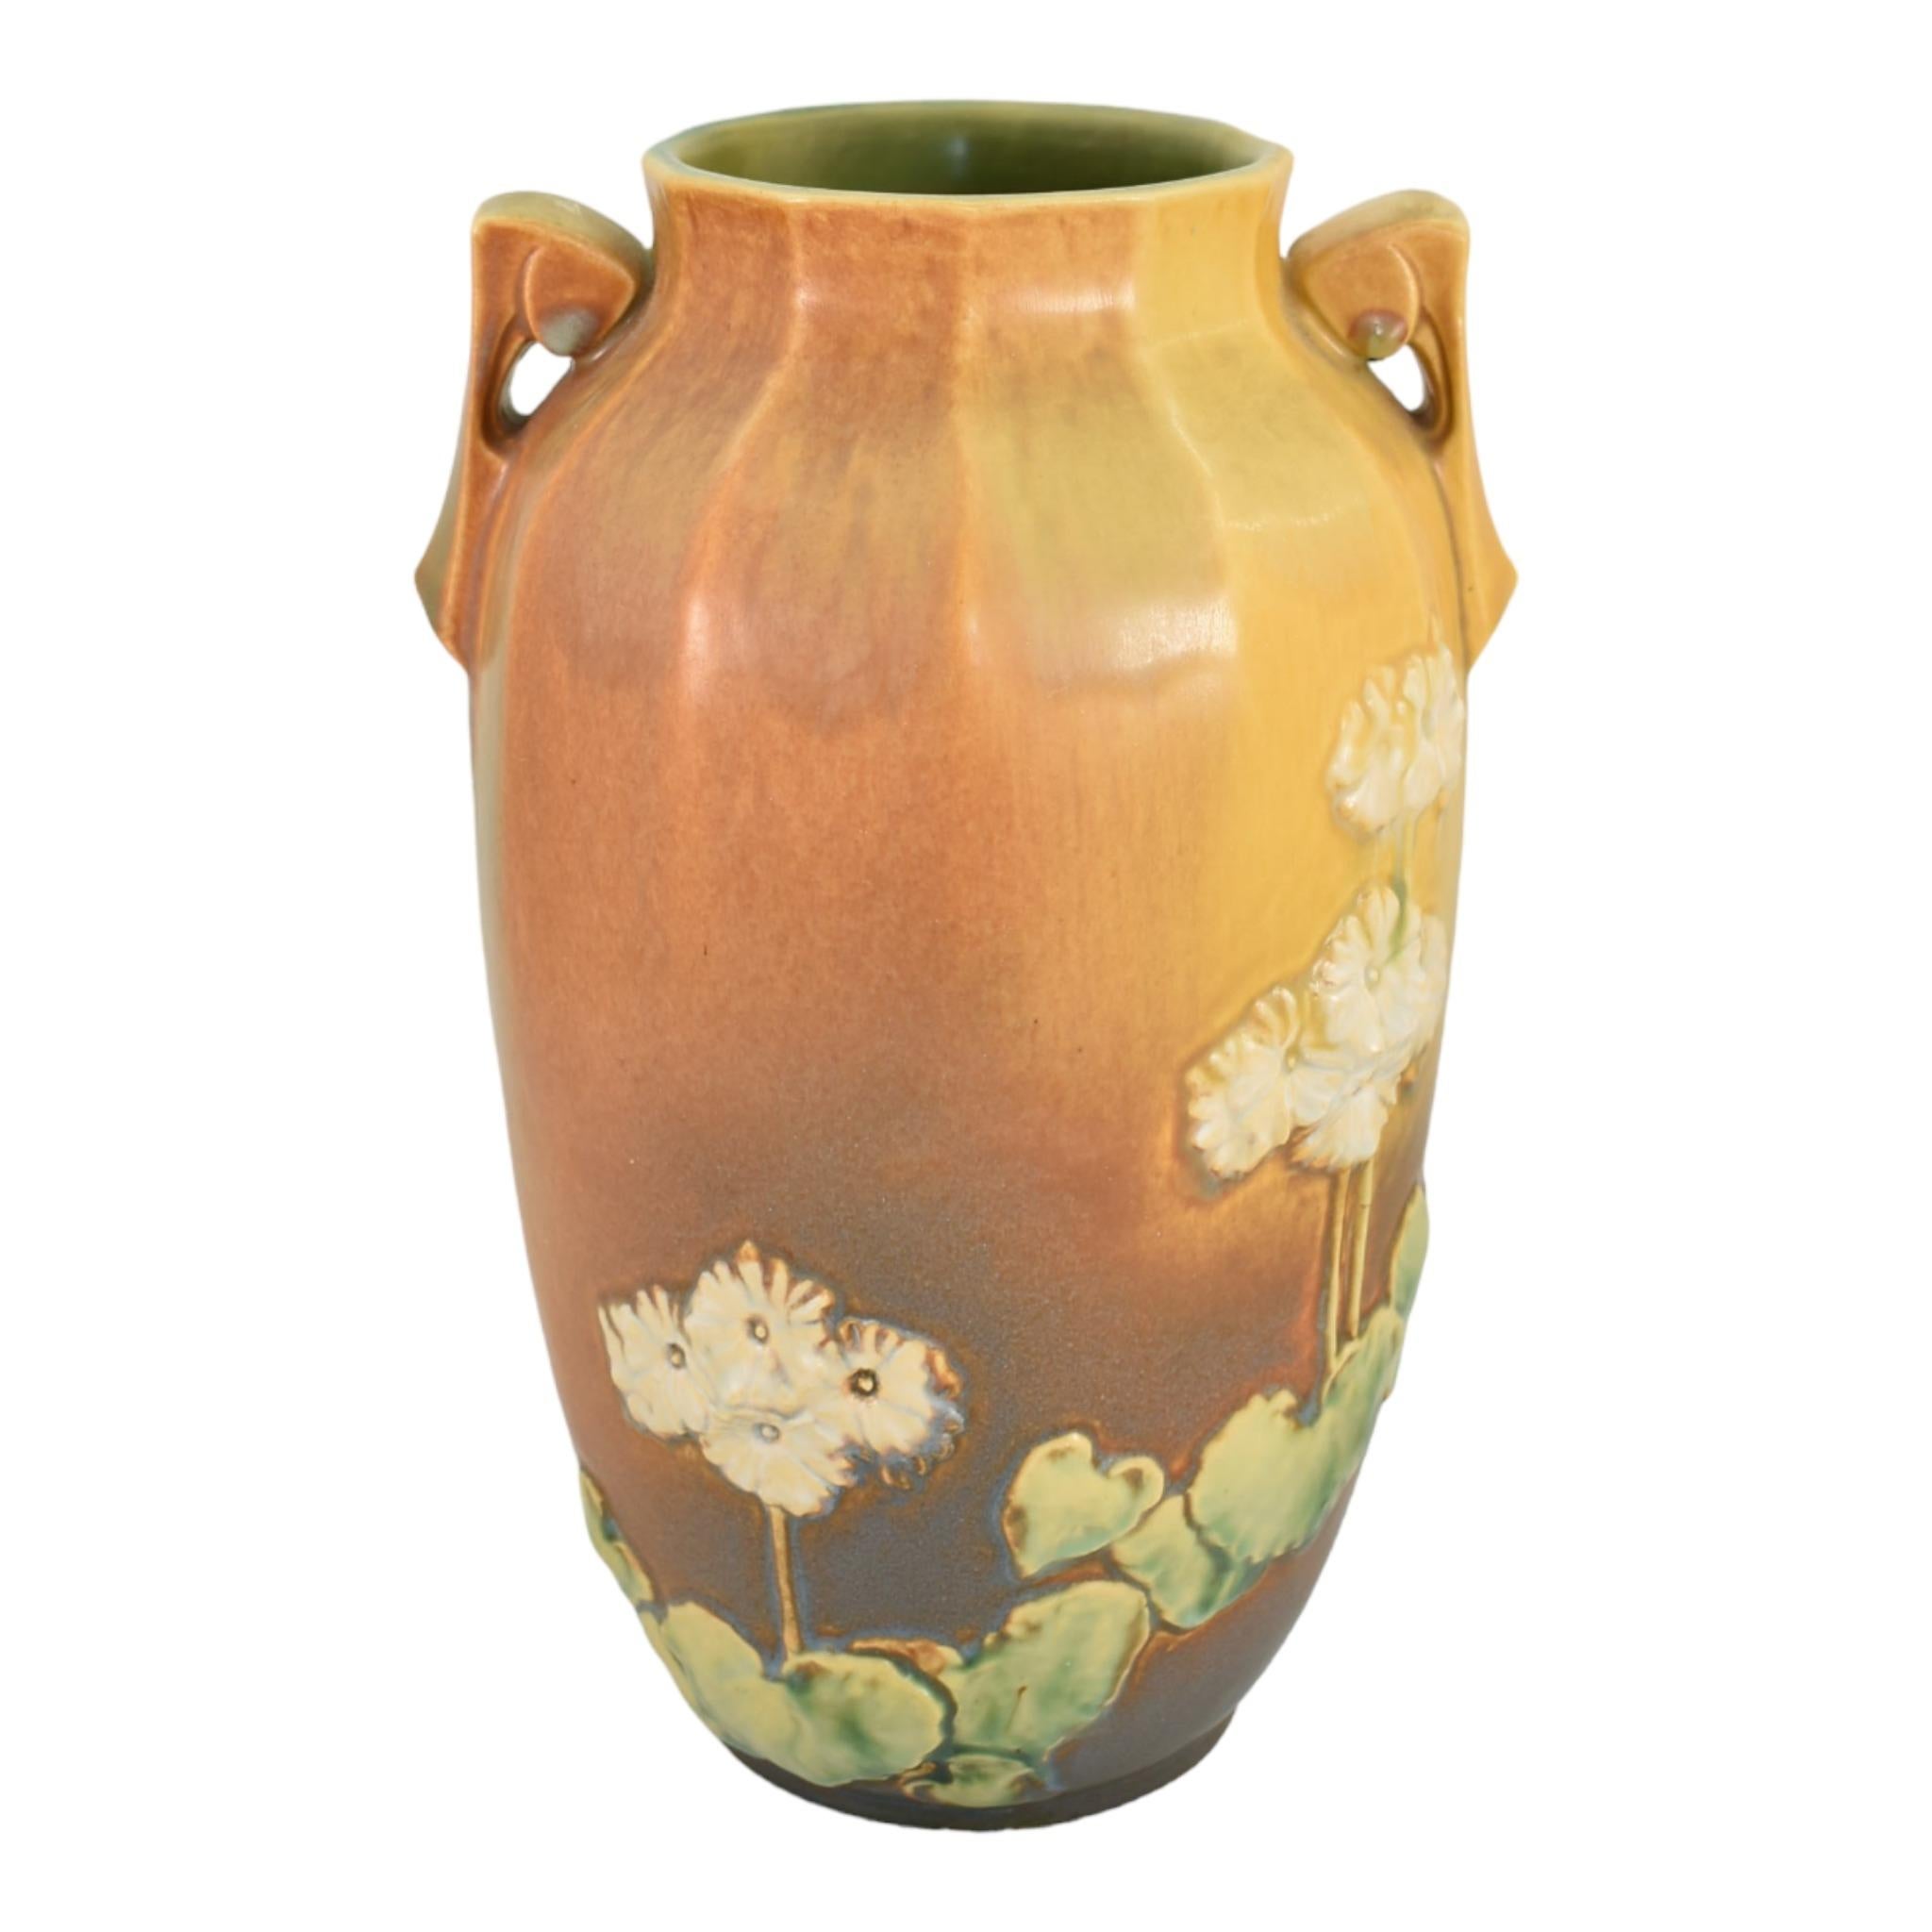 Roseville Primrose Experimentale Dreifachglasur-Vase aus Keramik 1936 Vintage-Keramik (Art déco) im Angebot